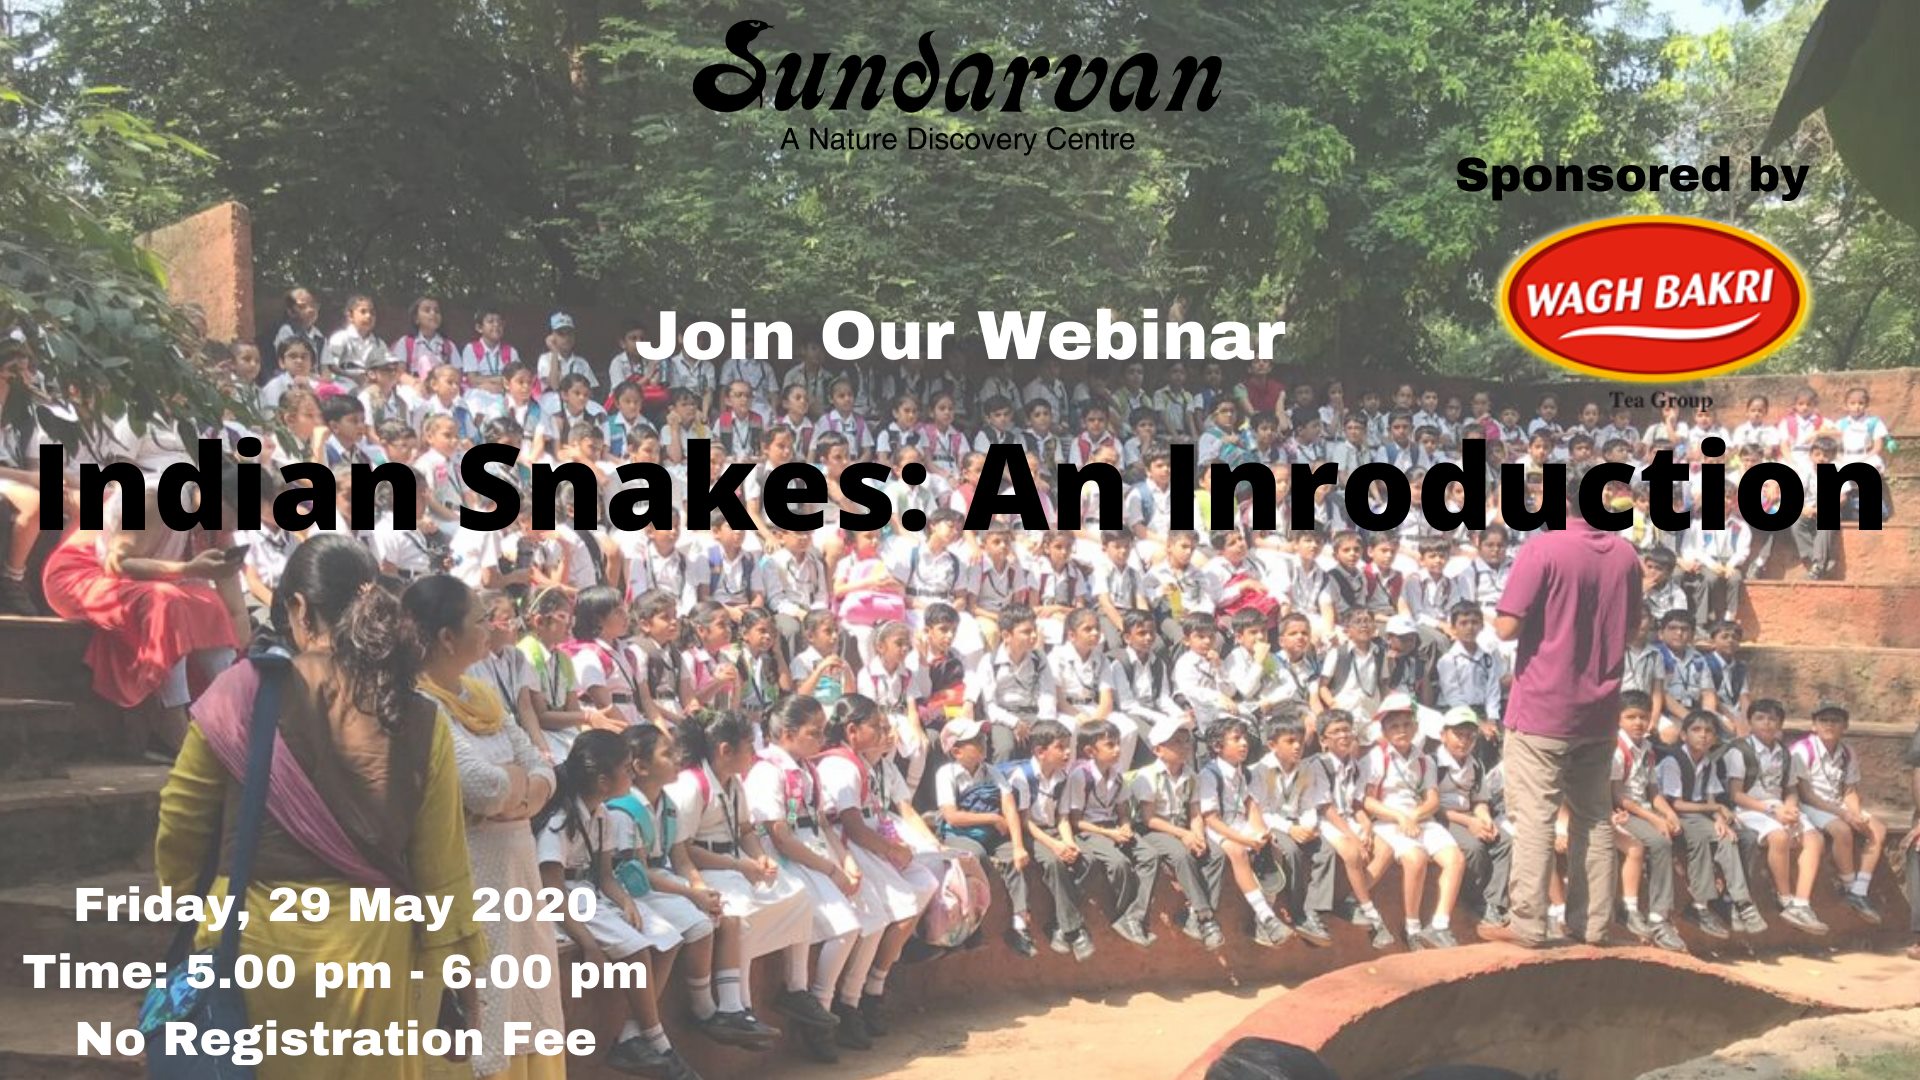 https://creativeyatra.com/wp-content/uploads/2020/05/Webinar-on-Indian-Snakes-An-Introduction.jpg